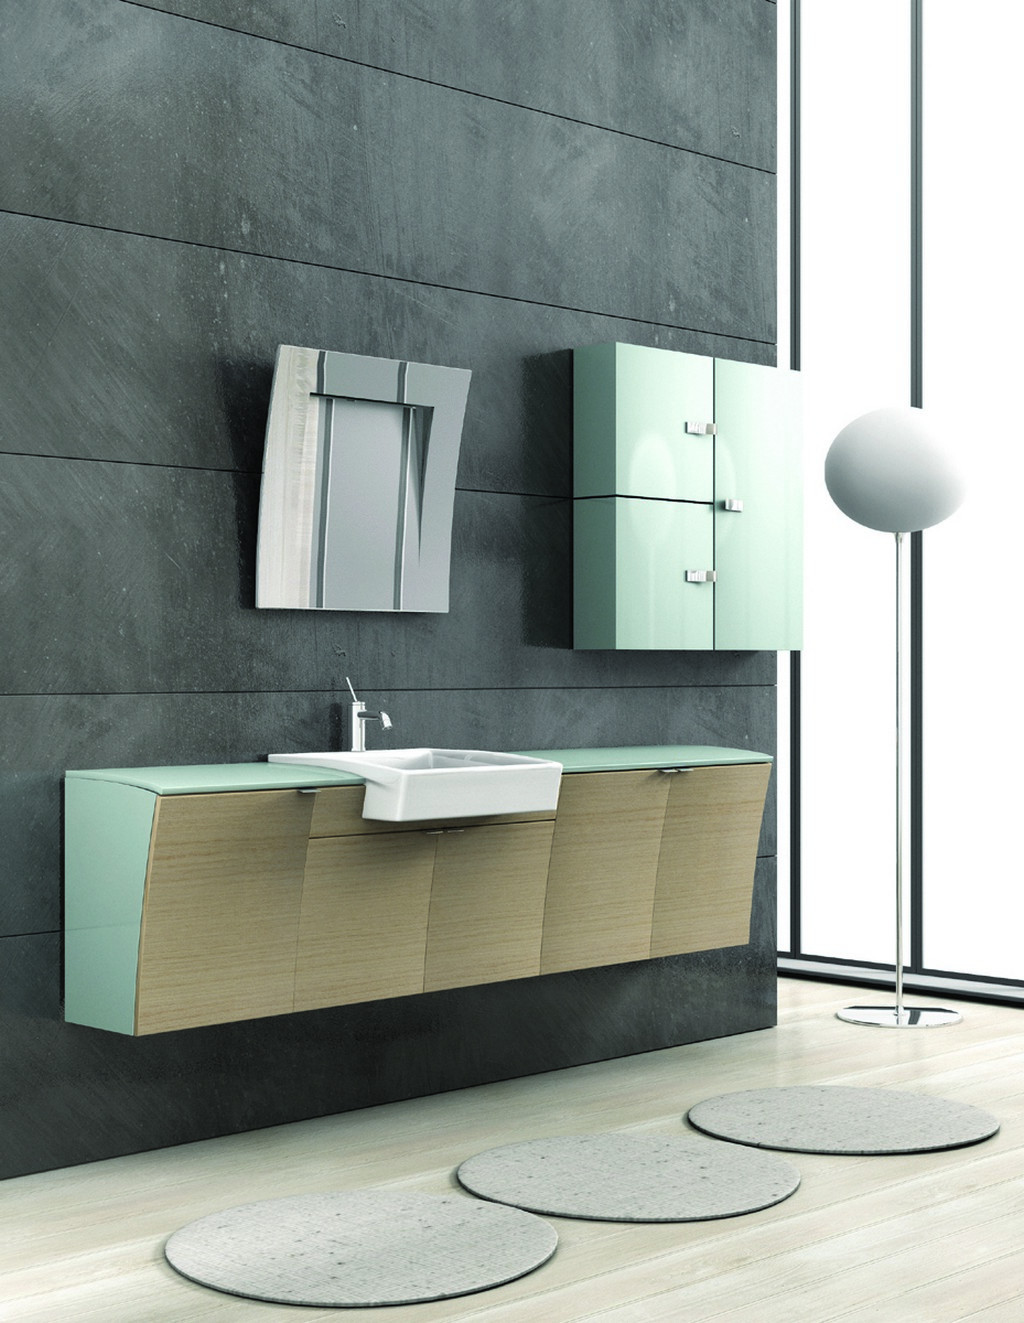 Modern Bathroom Tile Designs
 50 magnificent ultra modern bathroom tile ideas photos